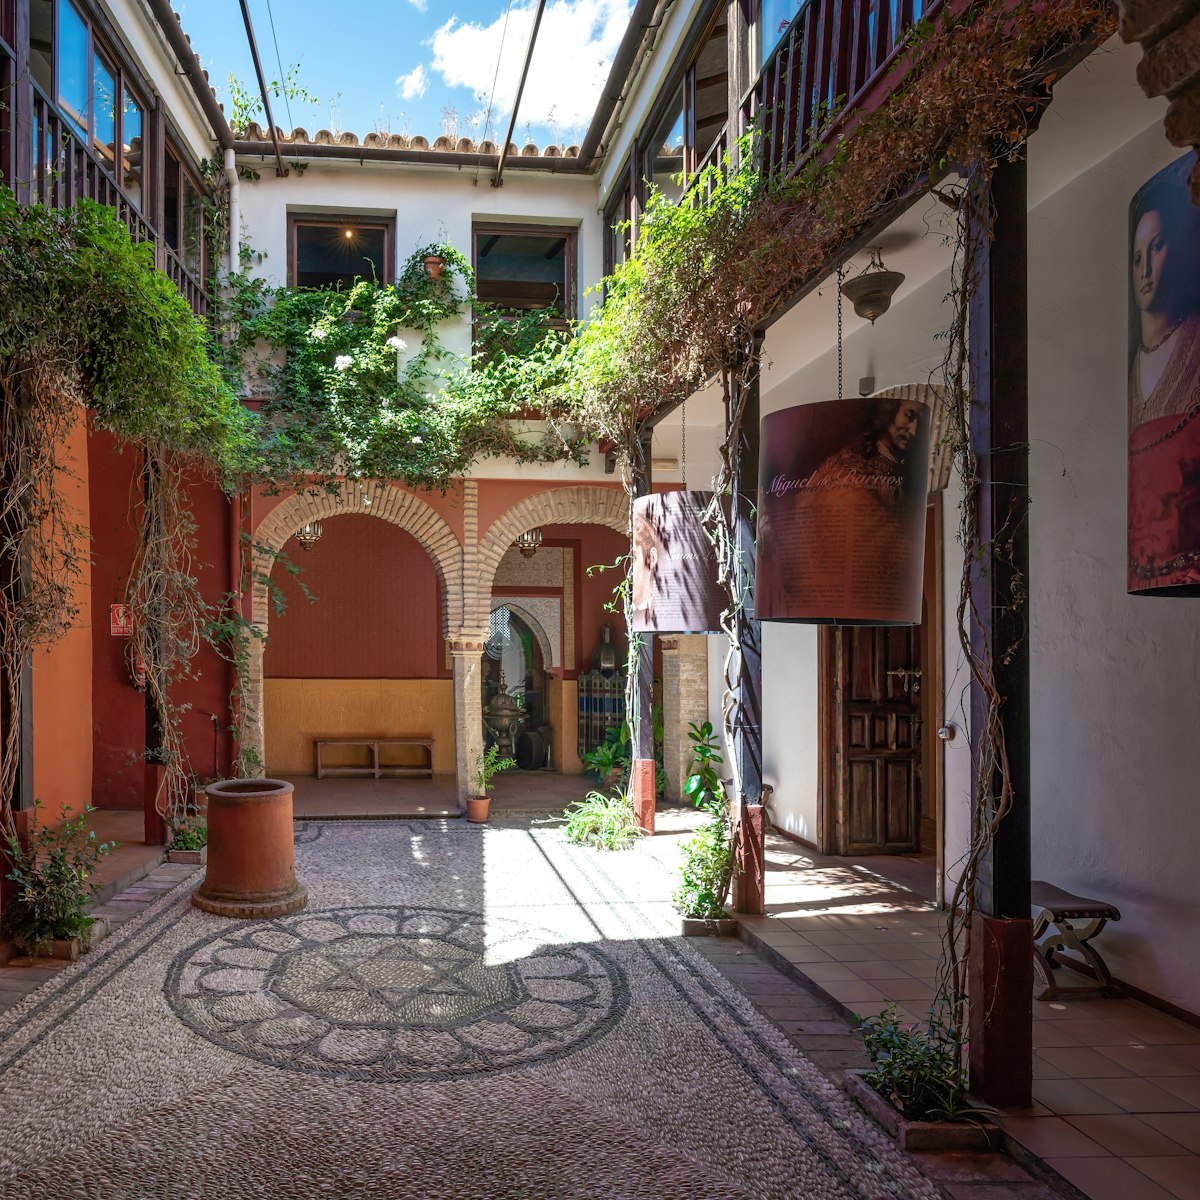 House of Sefarad Courtyard at Jewish Quarter (Juderia) - Cordoba, Andalusia, Spain.